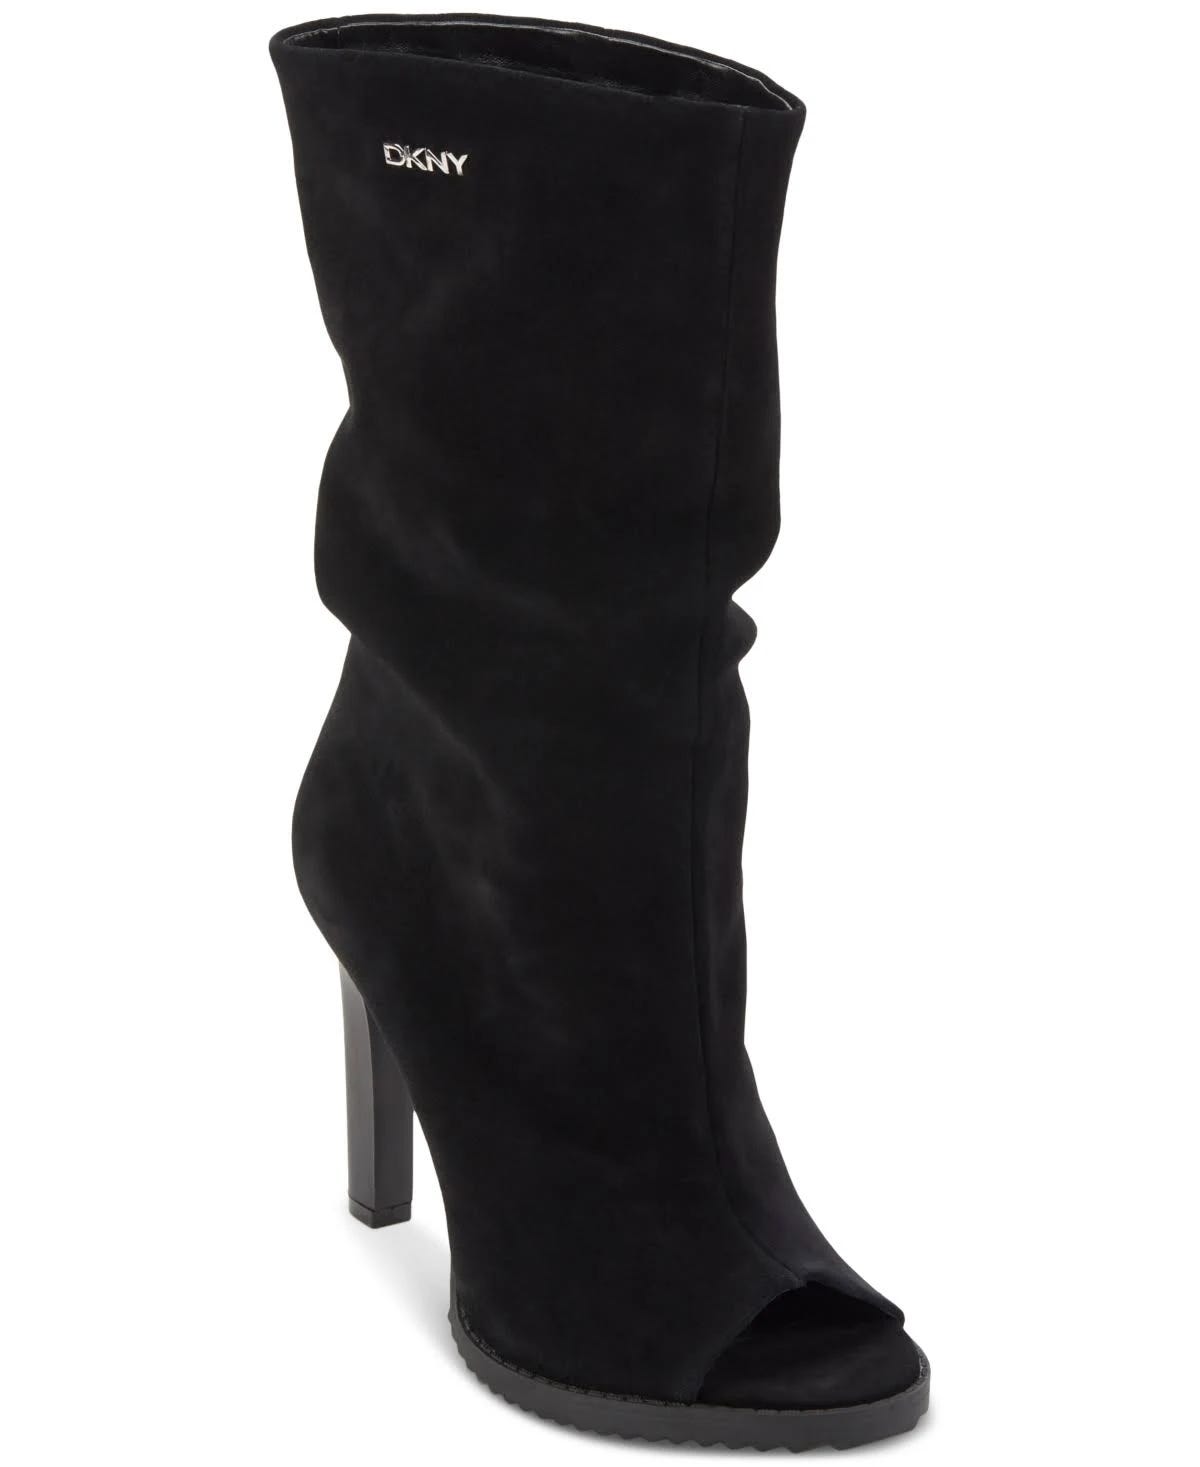 Dkny Blade Ankle High Heel Boots: Stylish, Cute Peep-Toe Design | Image